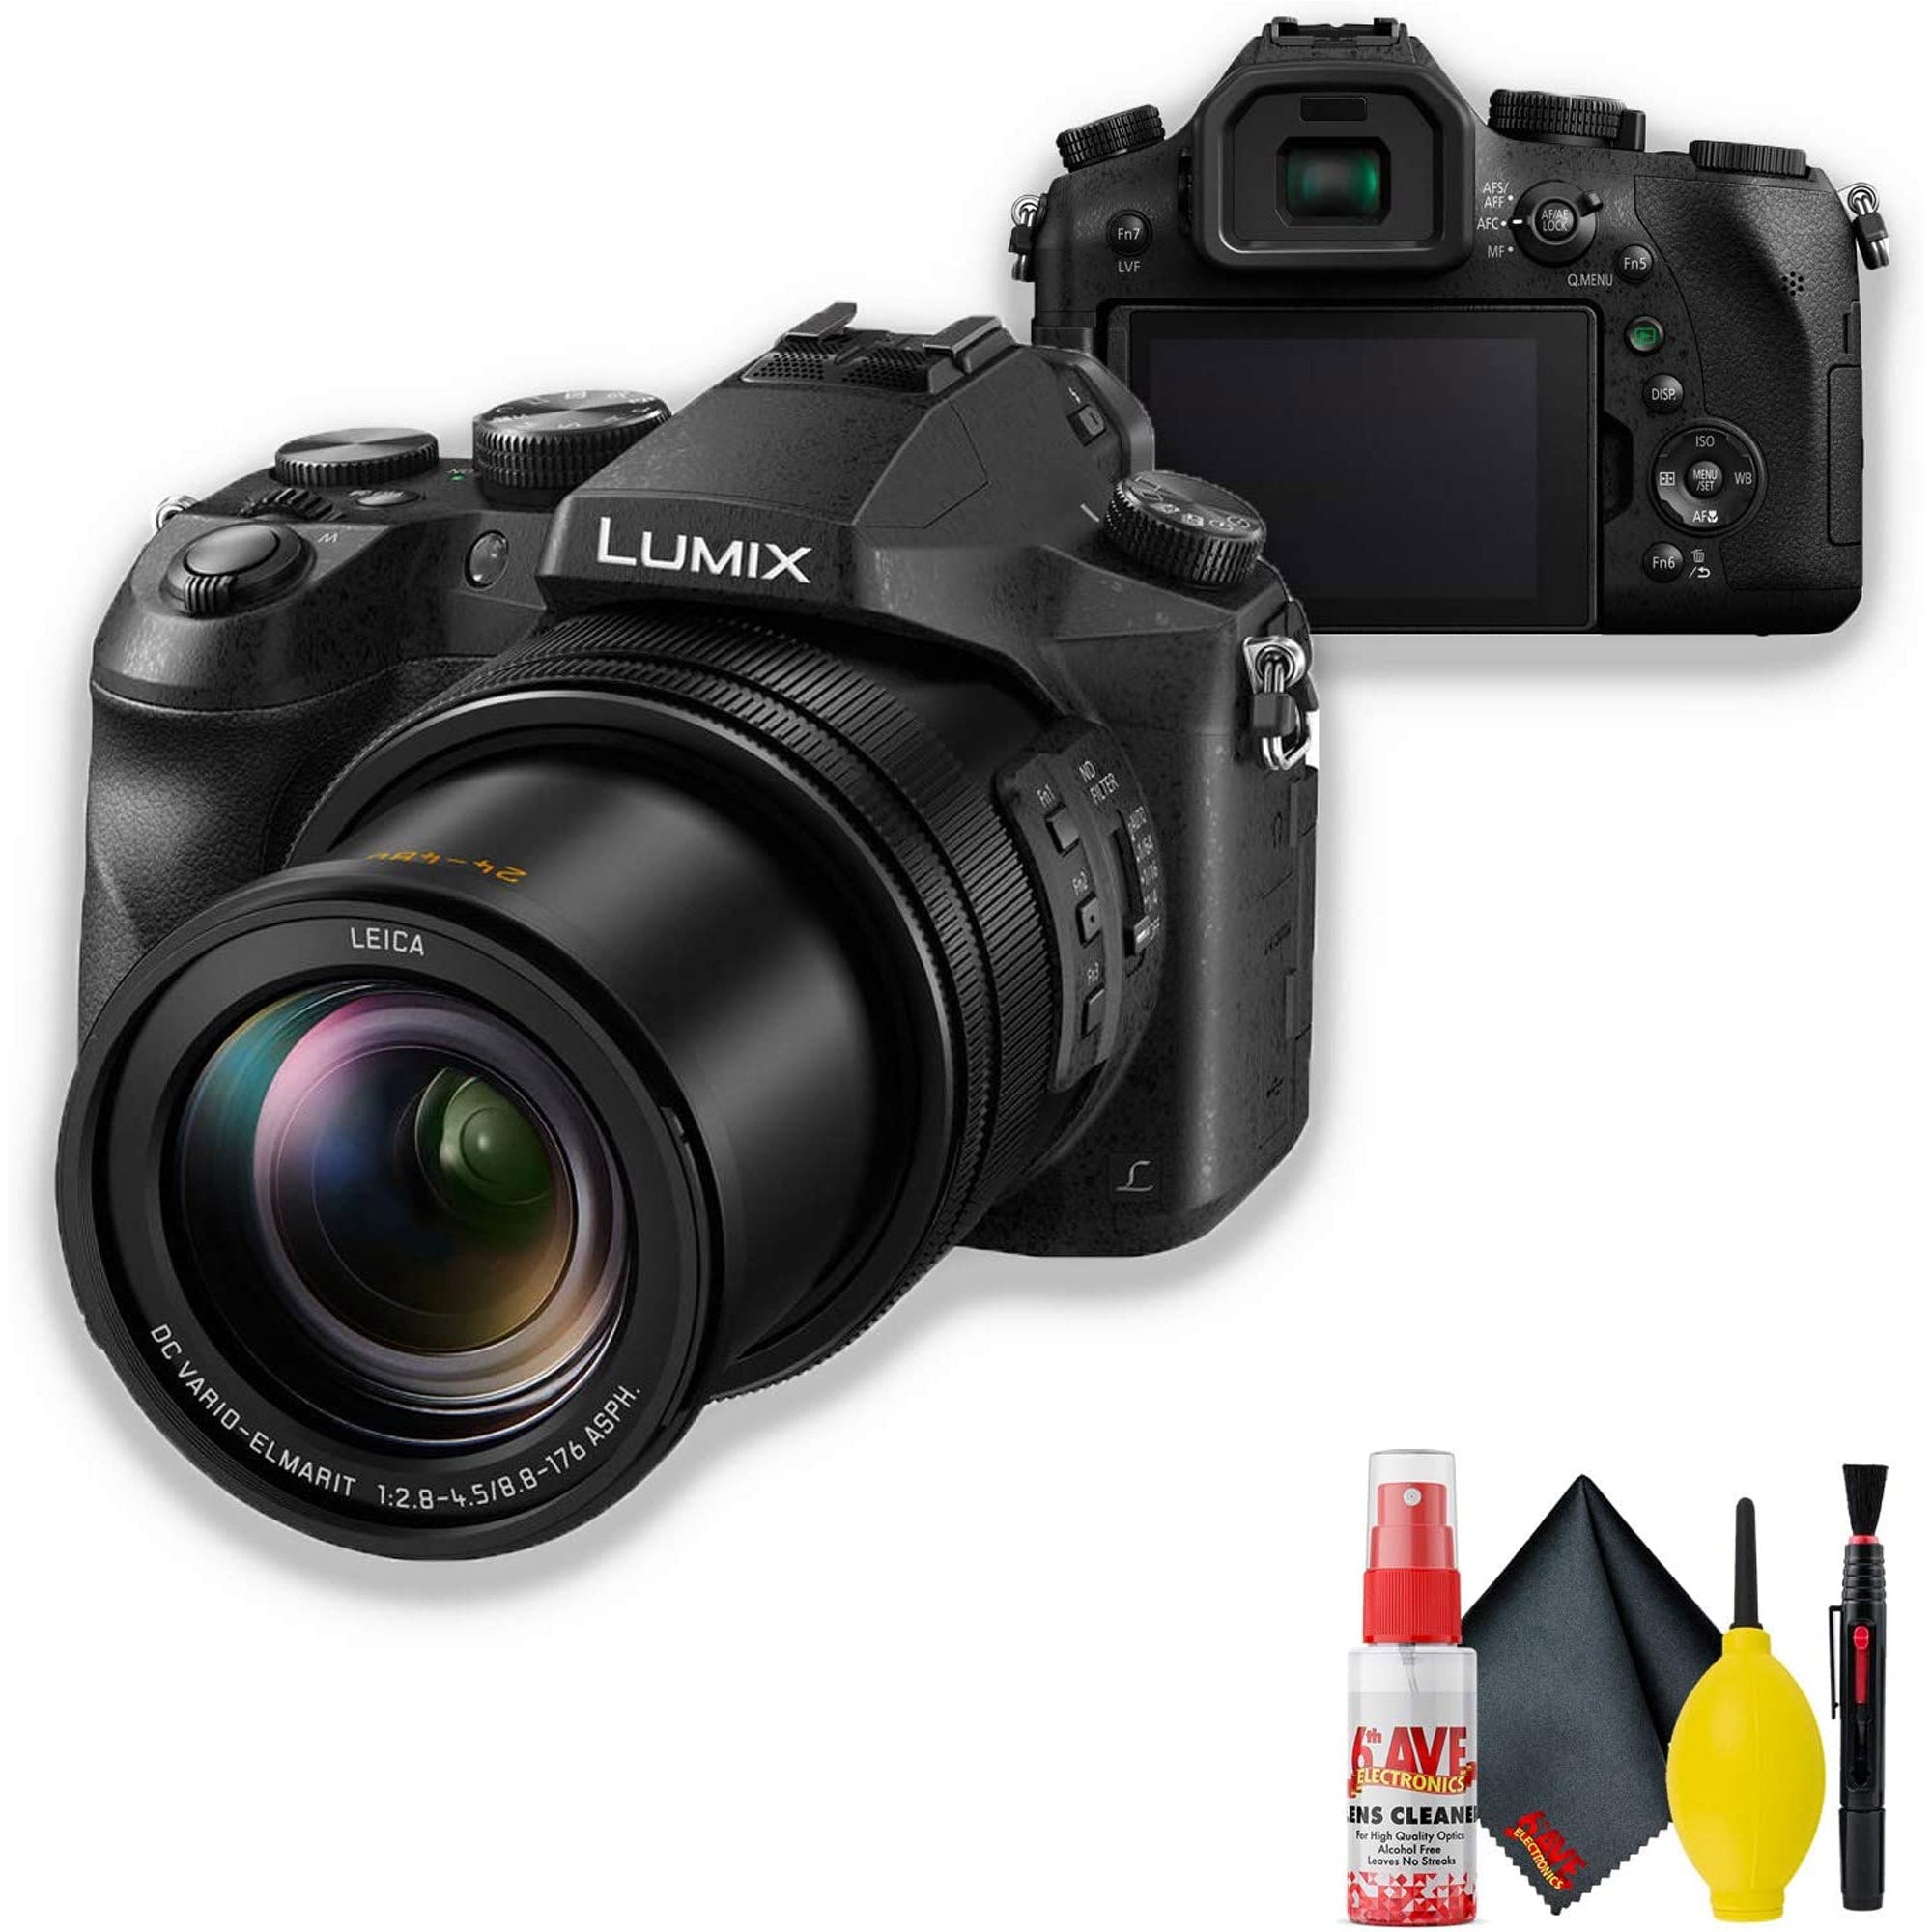 Panasonic Lumix DMC-FZ2500 Digital Camera with Cleaning Kit Base Bundle